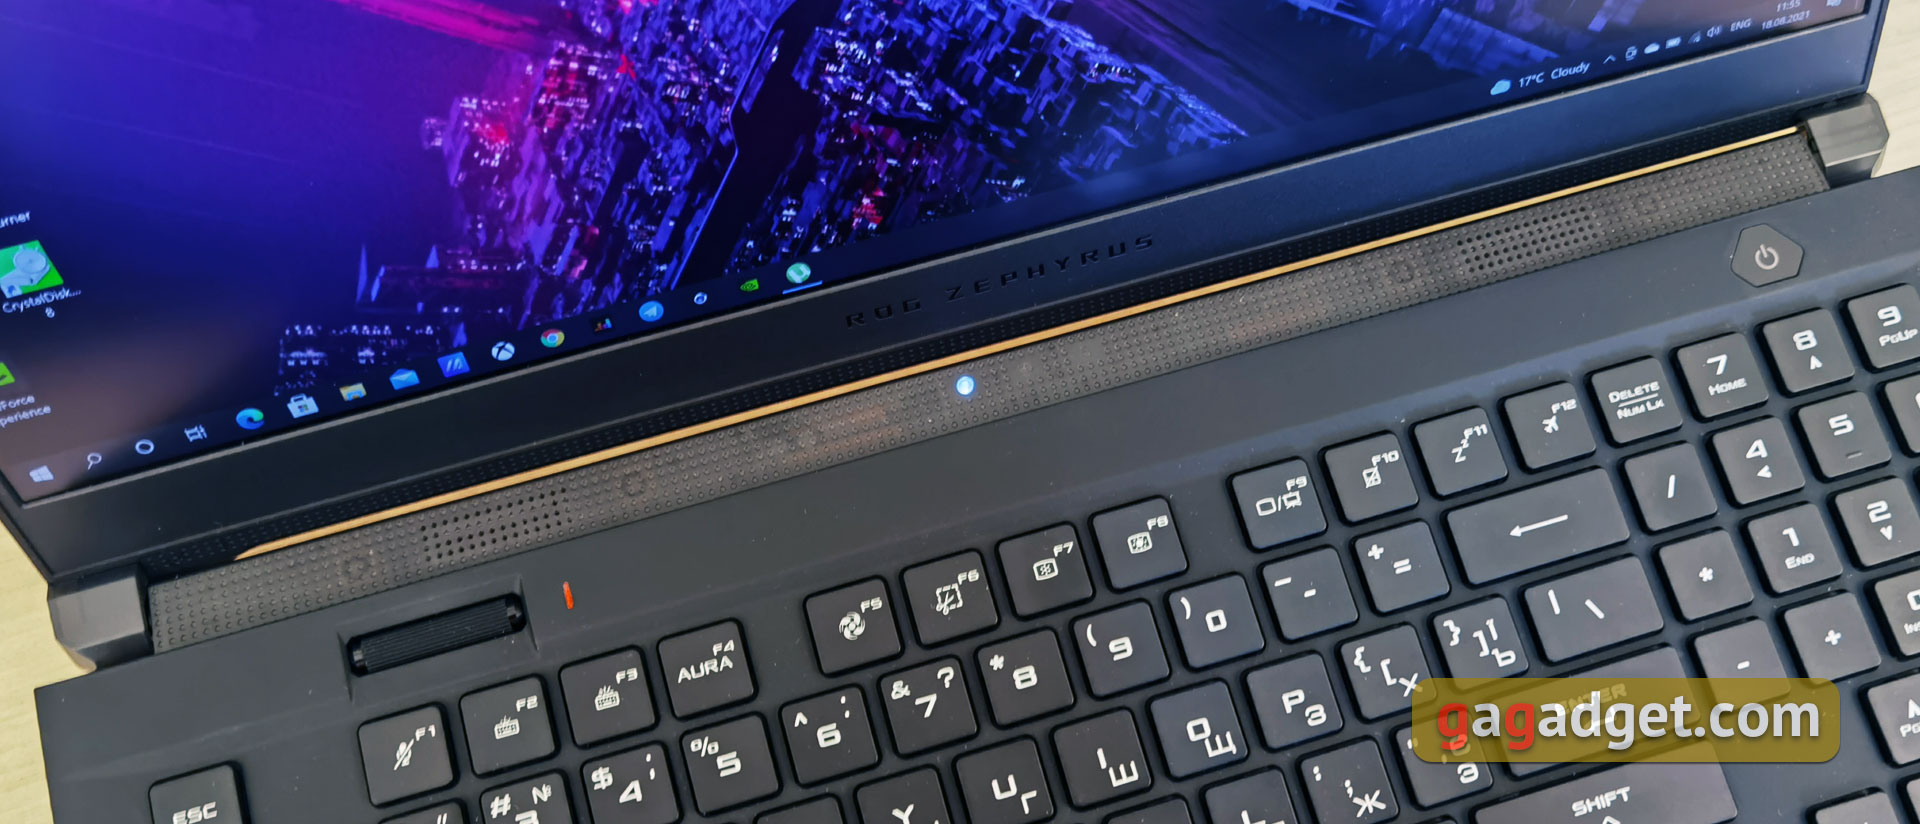 ASUS ROG Zephyrus S17 GX703 im Test: ein All-in-One-Gaming-Laptop-8